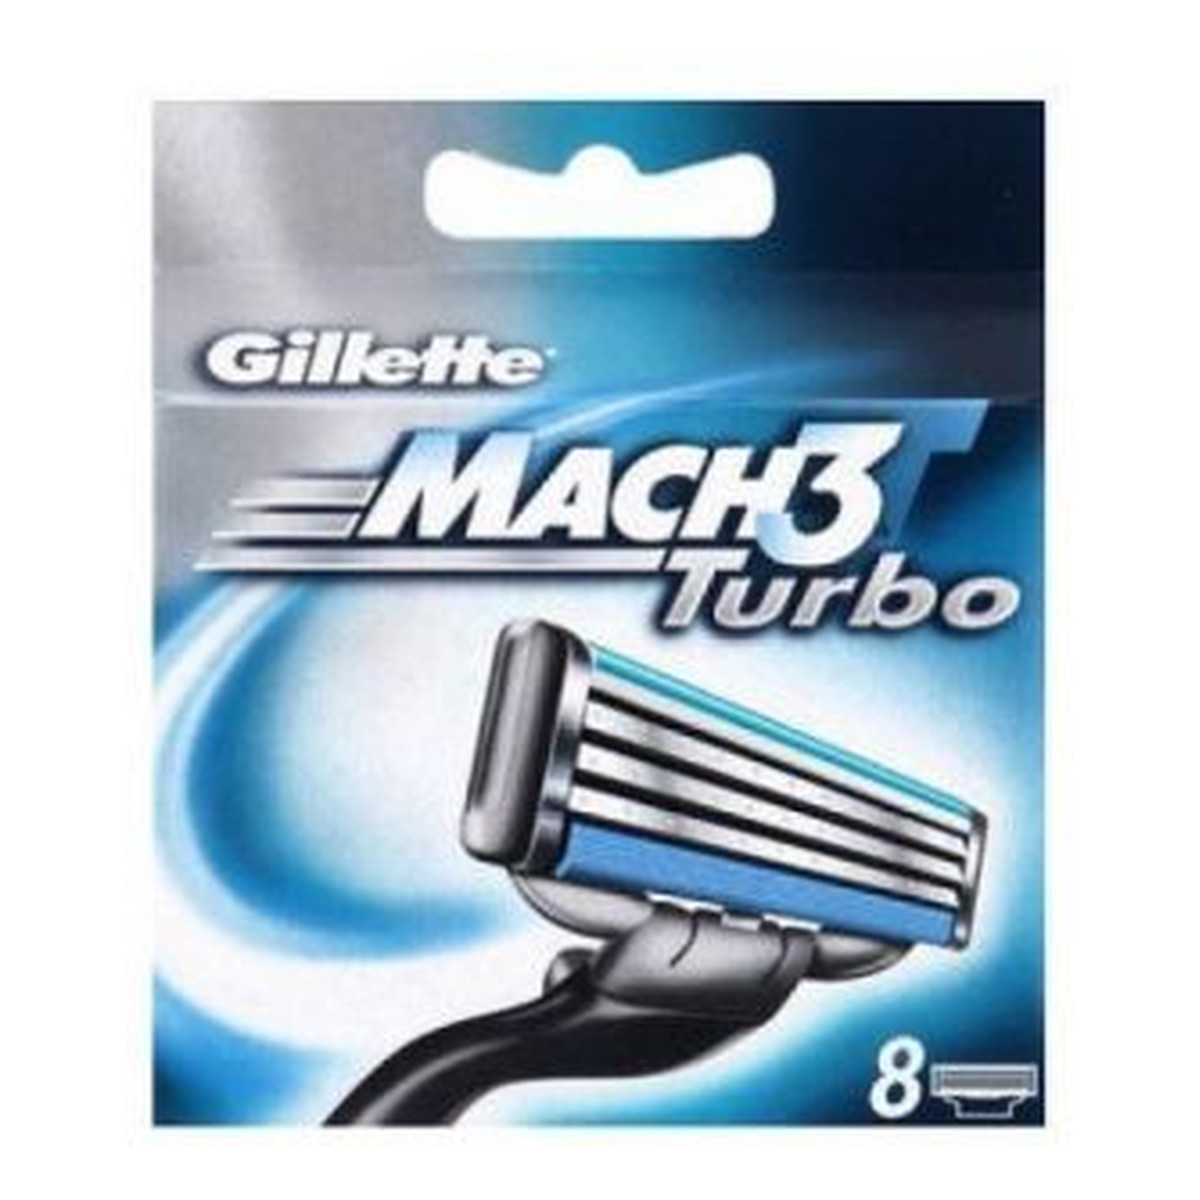 Gillette Gillette Mach 3 Turbo wkłady (8 szt)